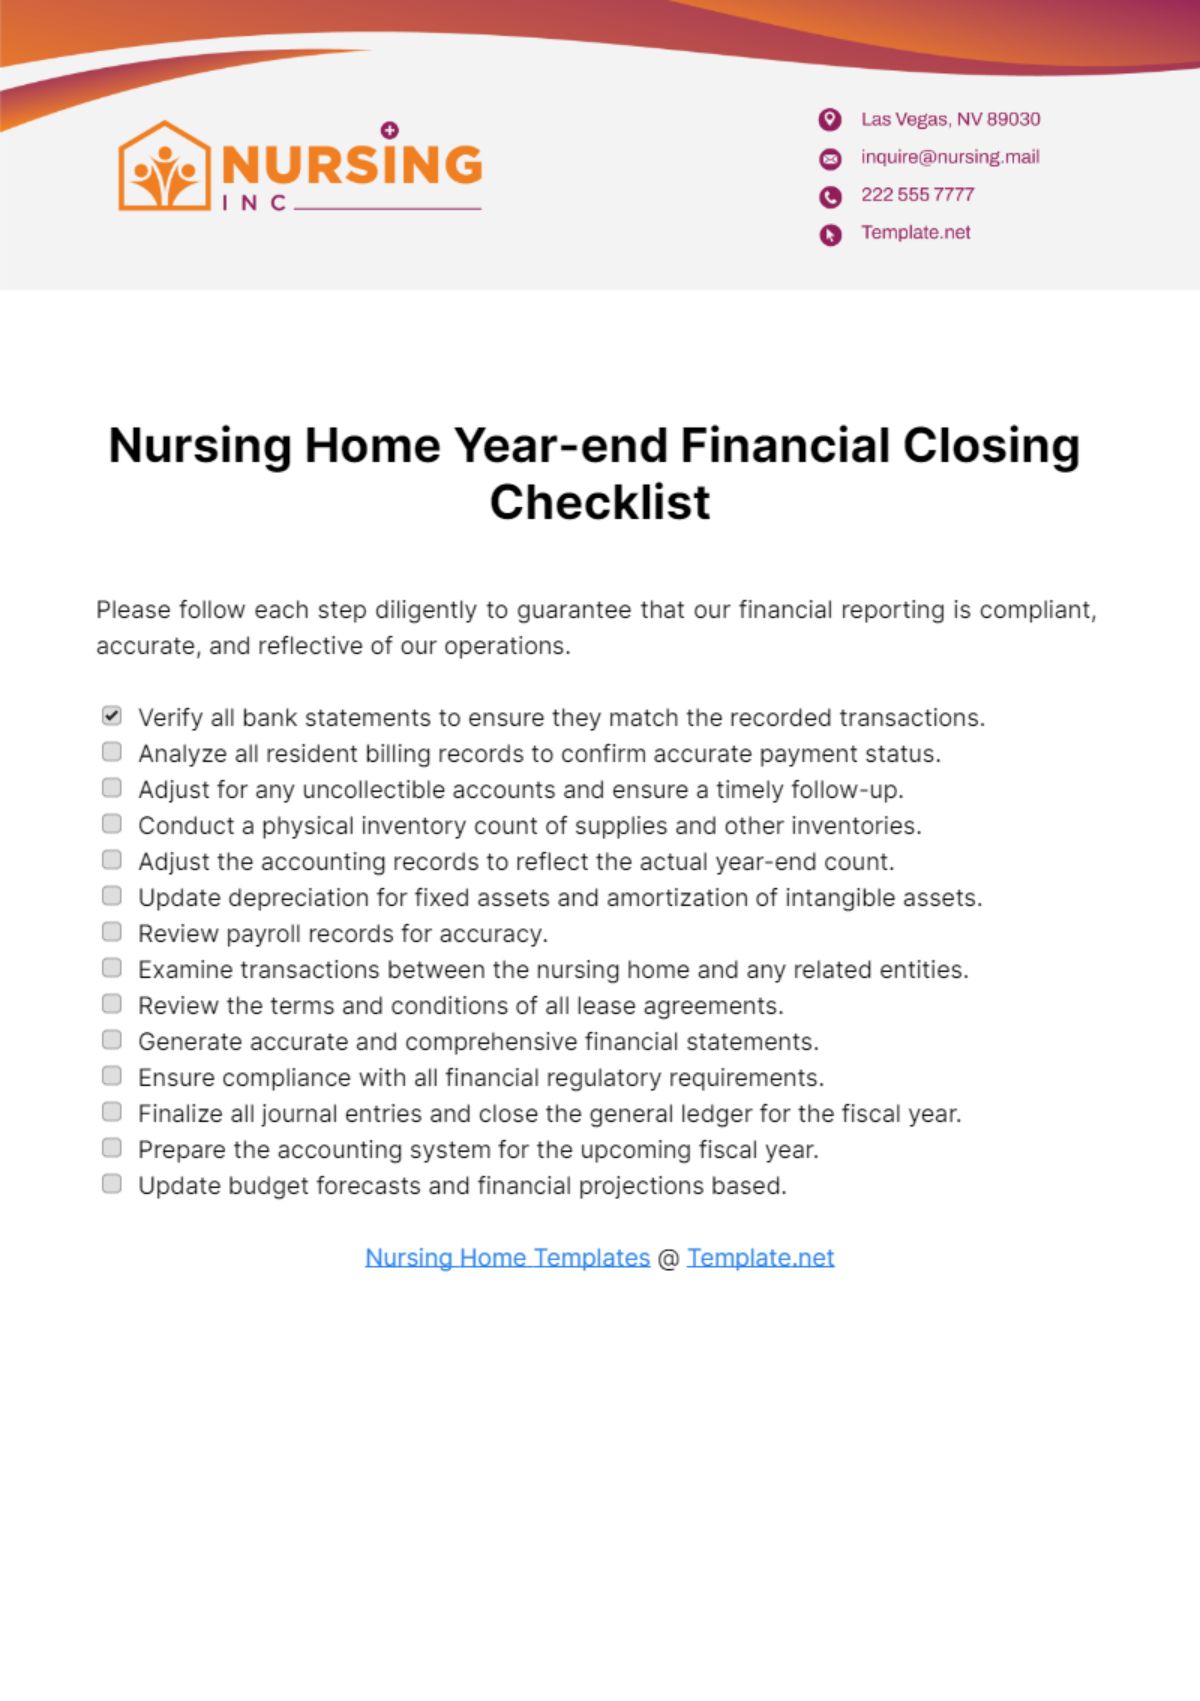 Free Nursing Home Year-end Financial Closing Checklist Template